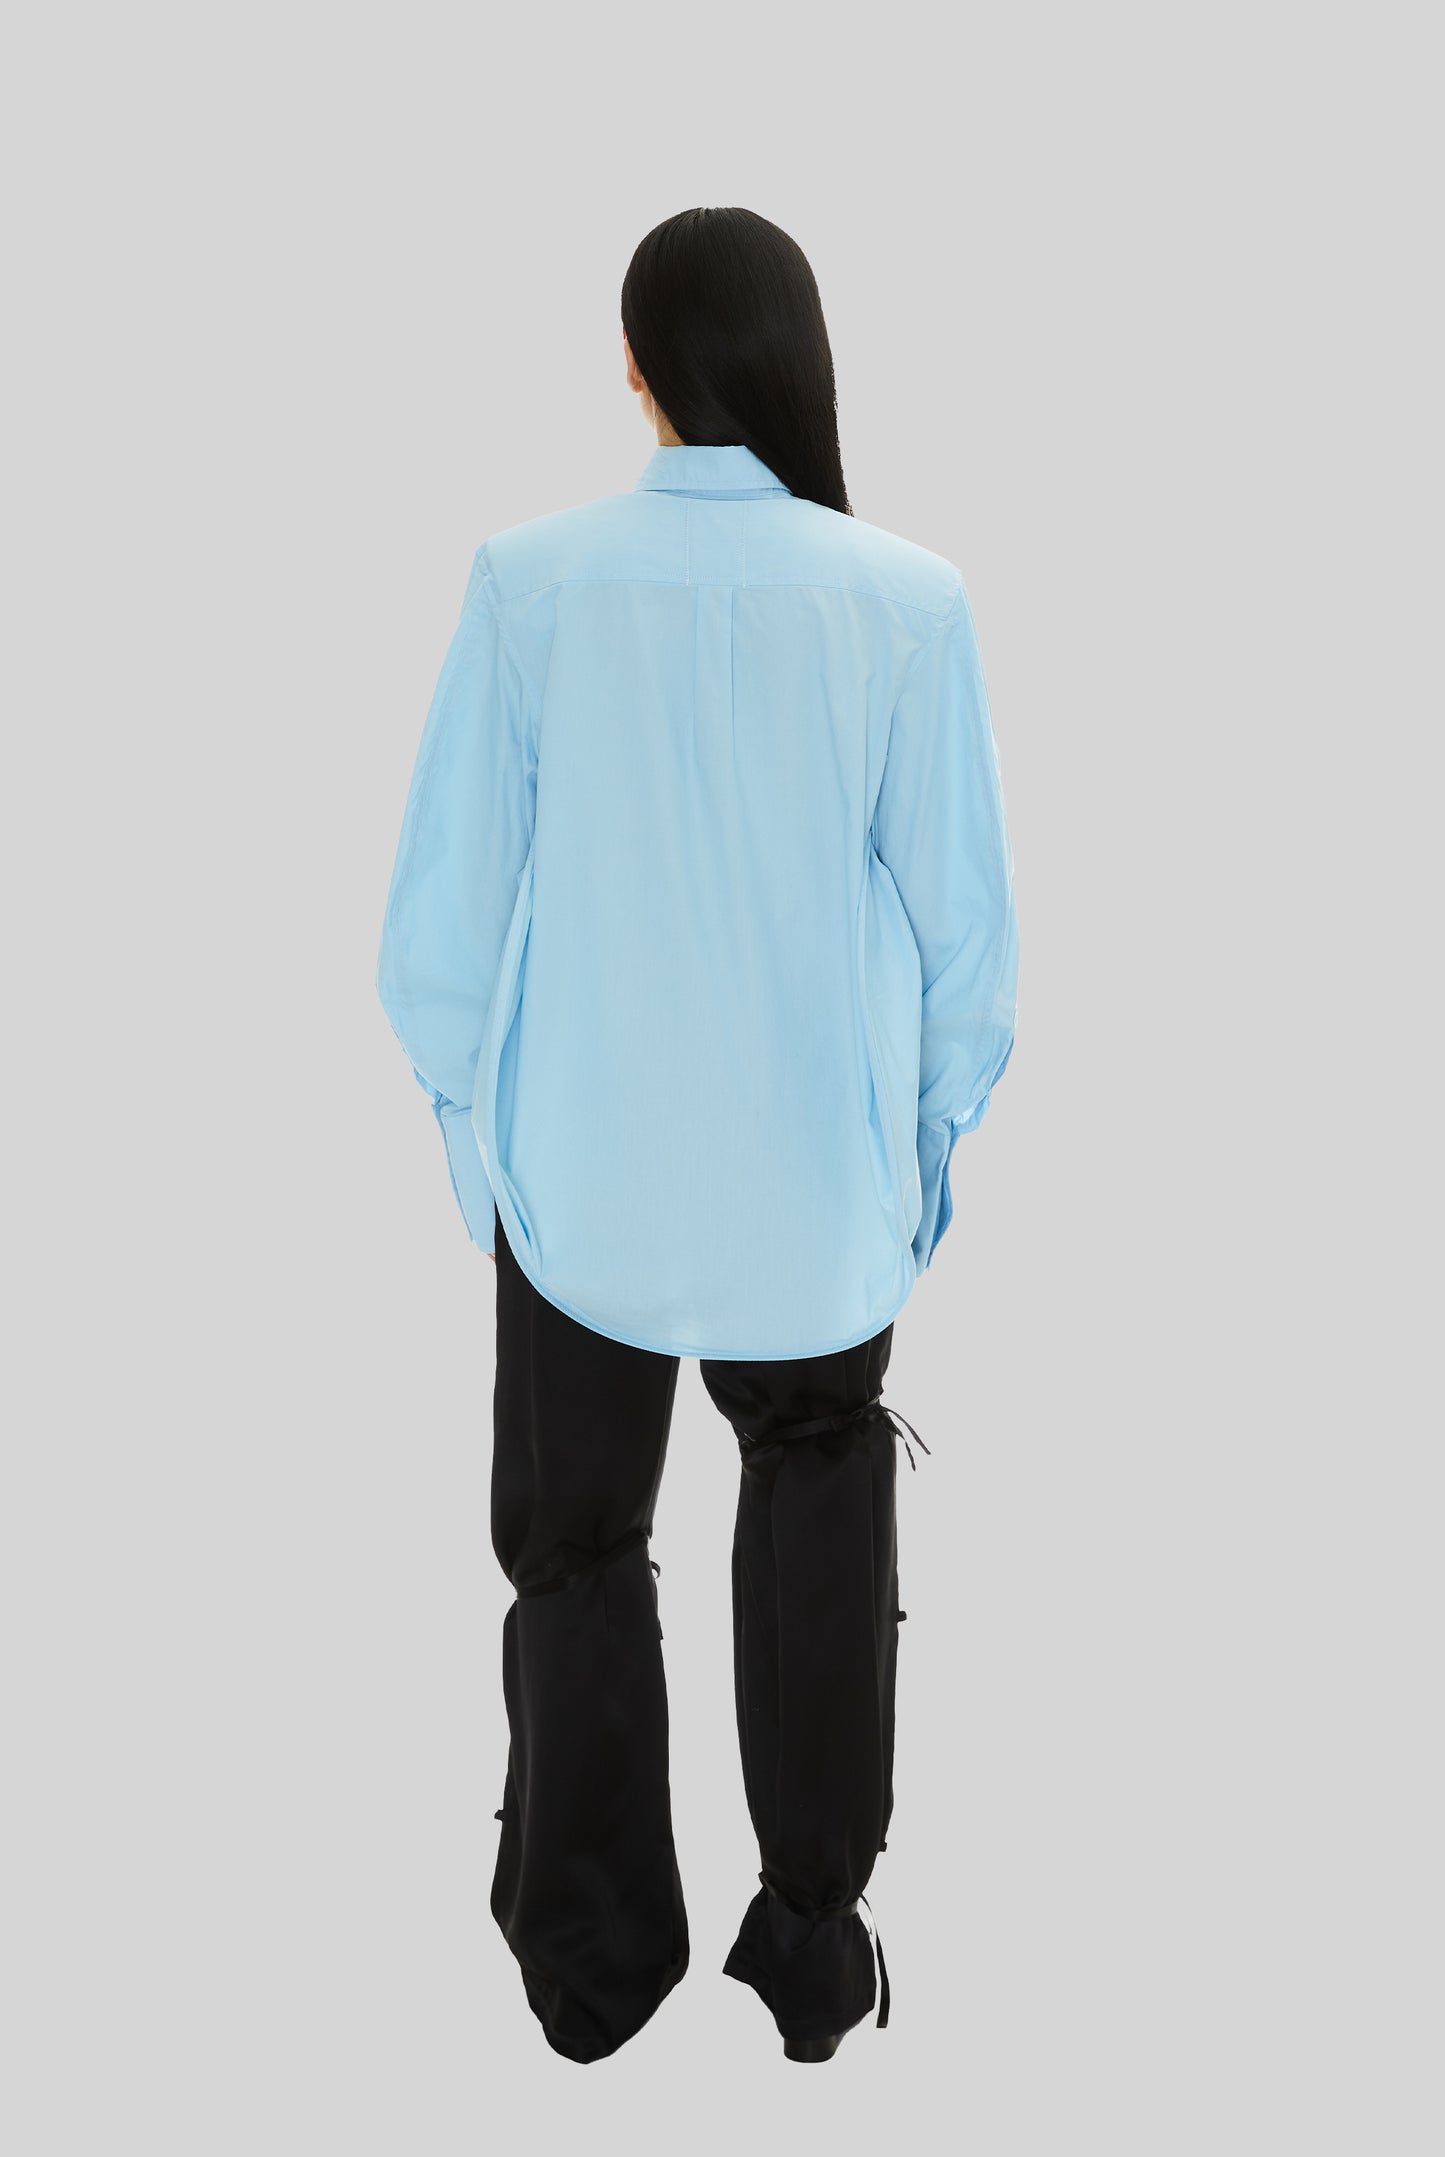 Blossom Long-Sleeved Blouse in Office Blue